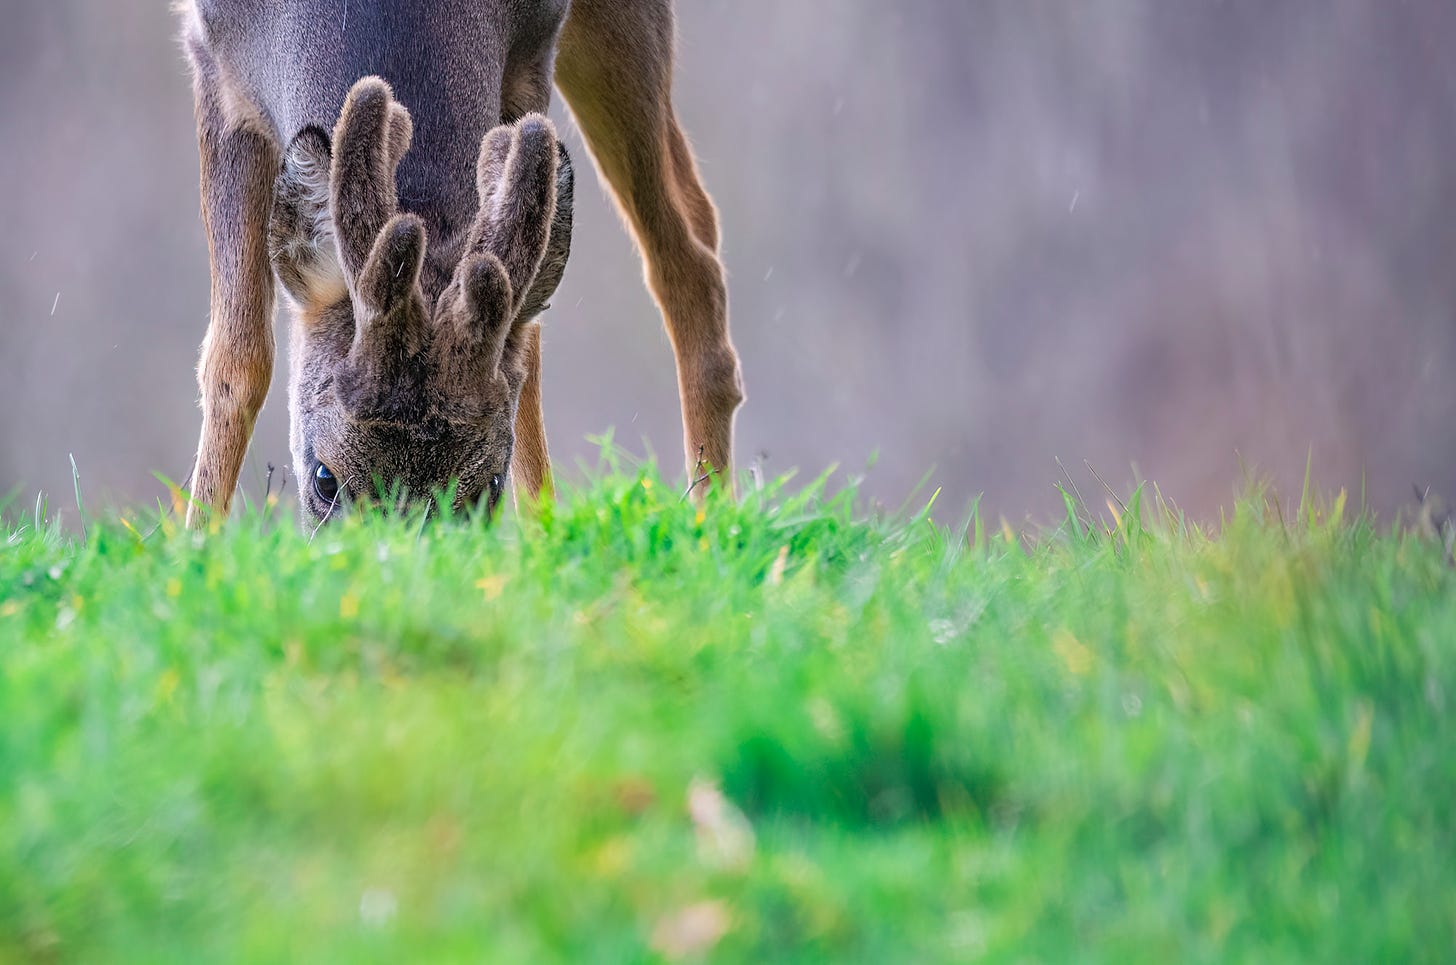 Photo of a roe deer buck grazing